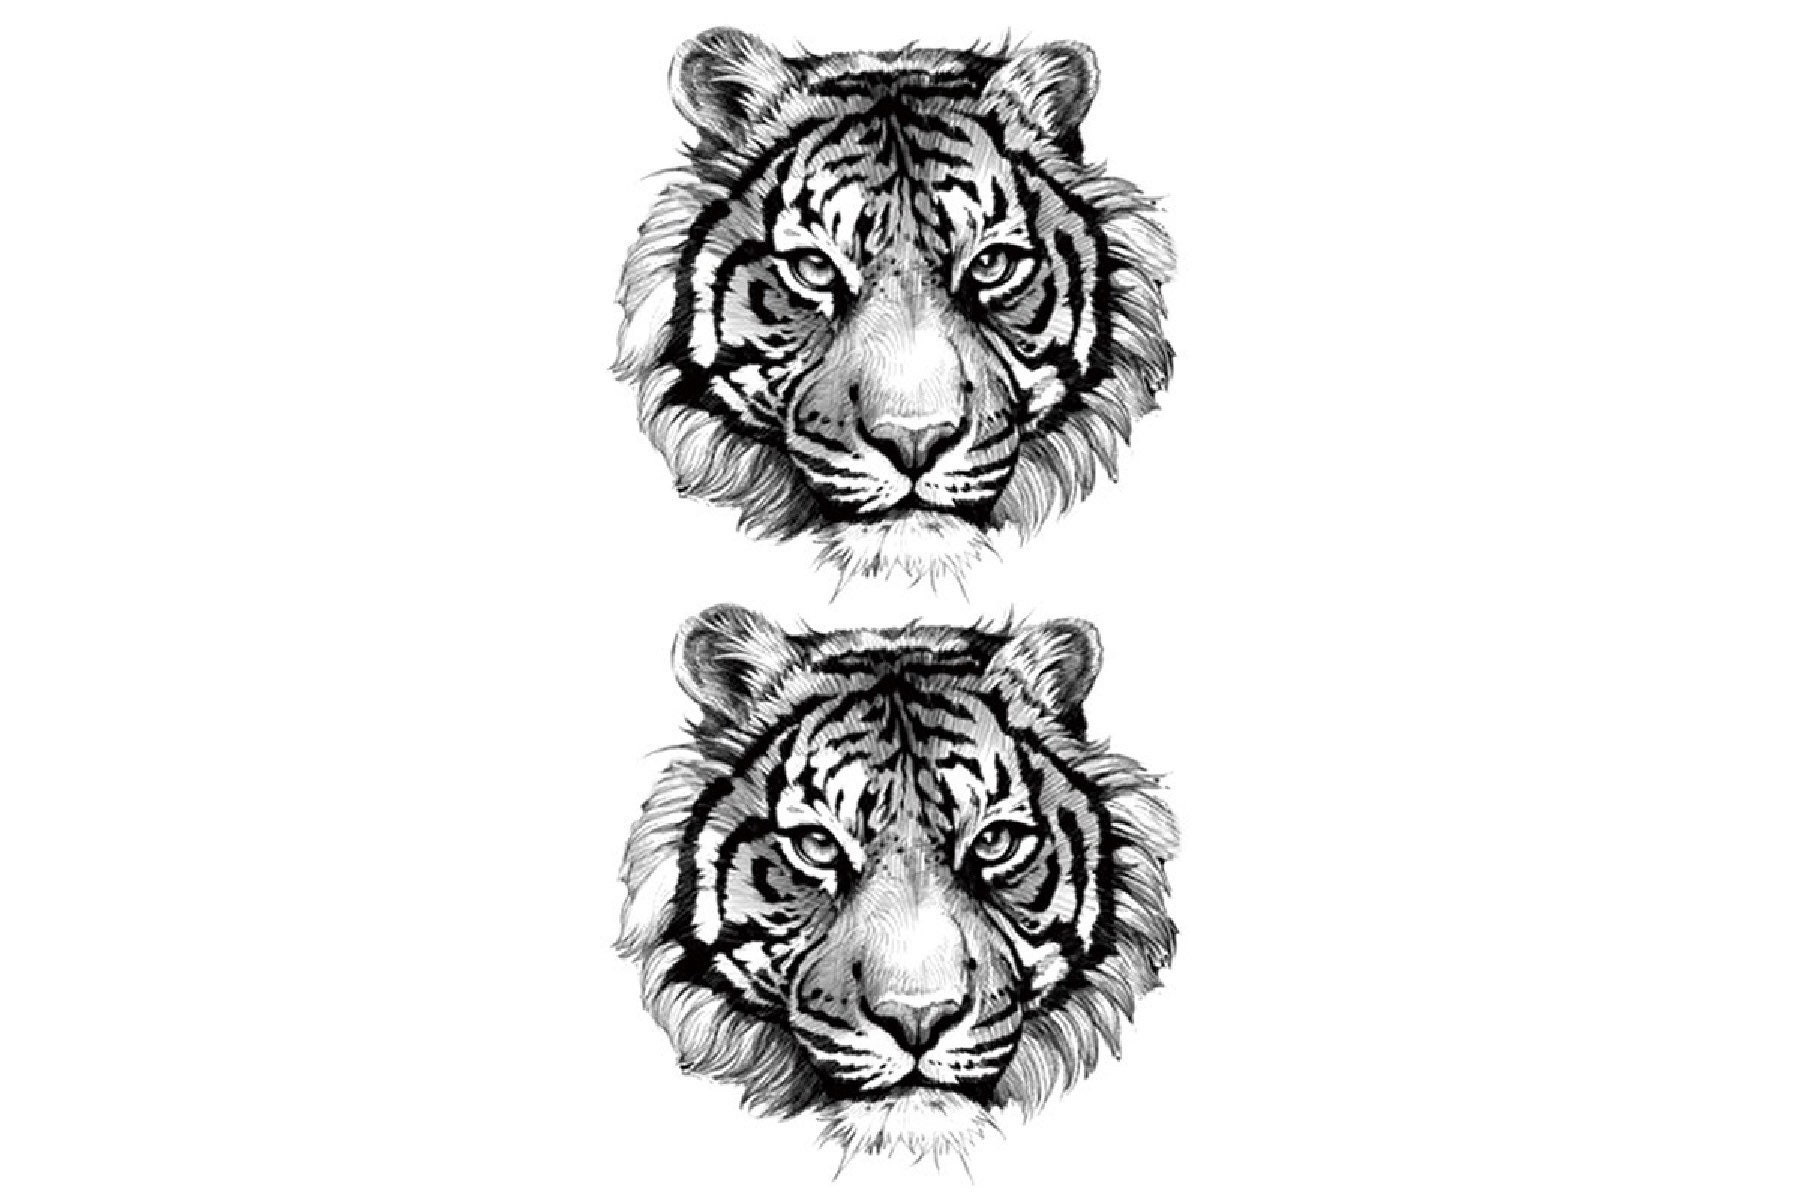 Badass tiger tattoo by nsanenl on DeviantArt